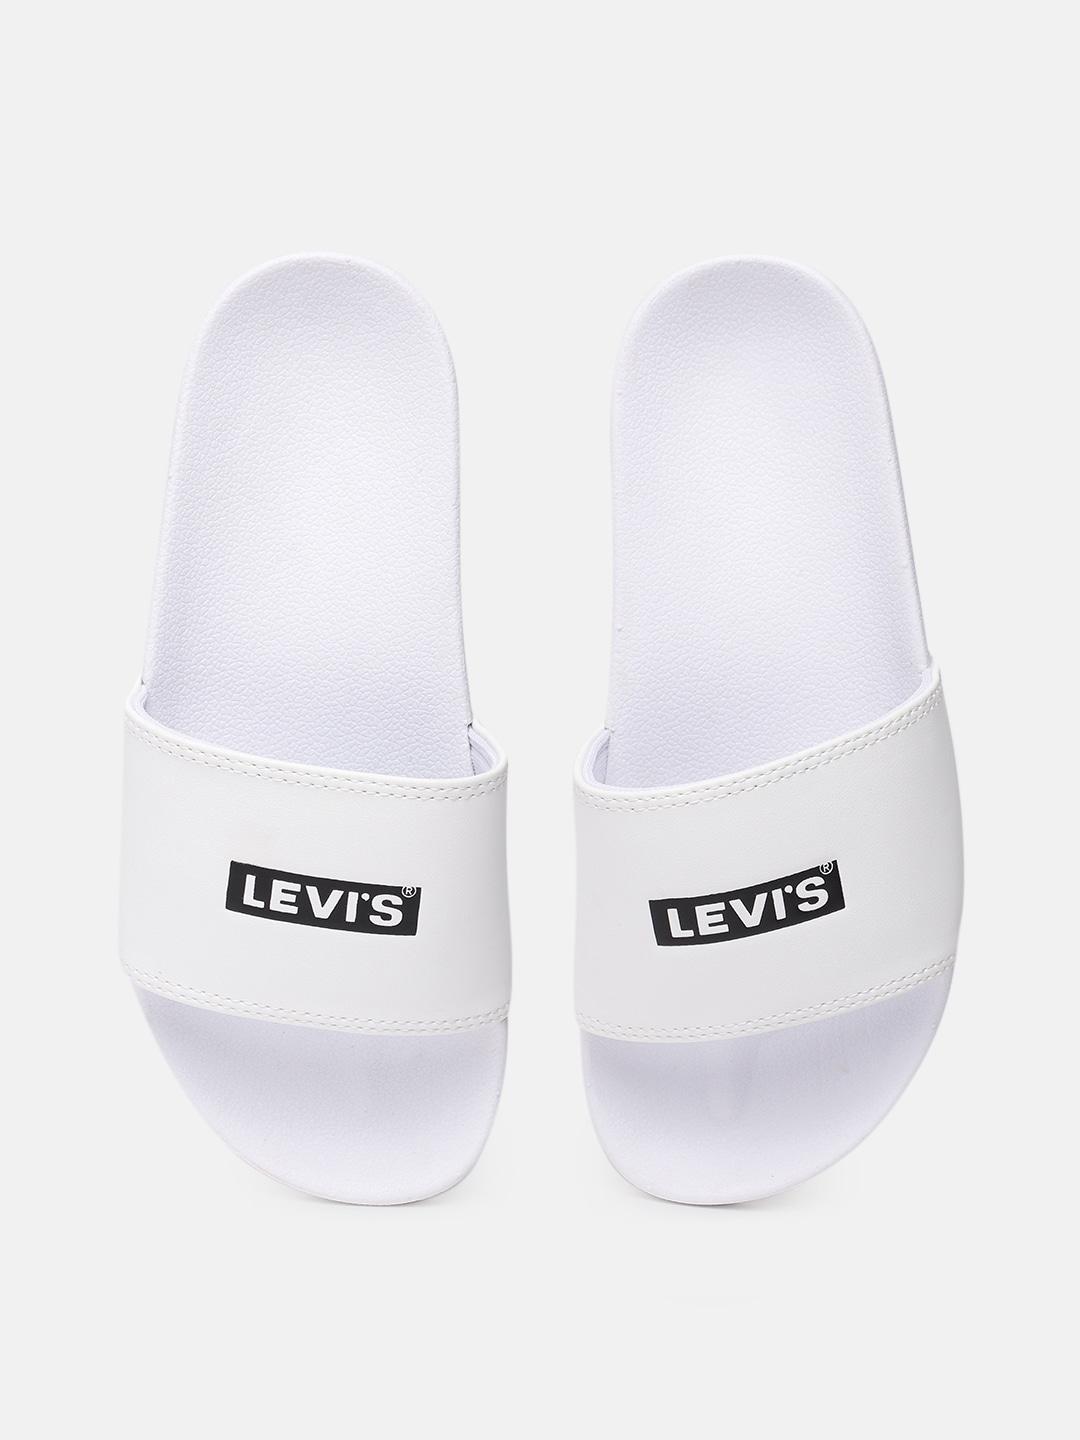 levis-women-white-printed-sliders